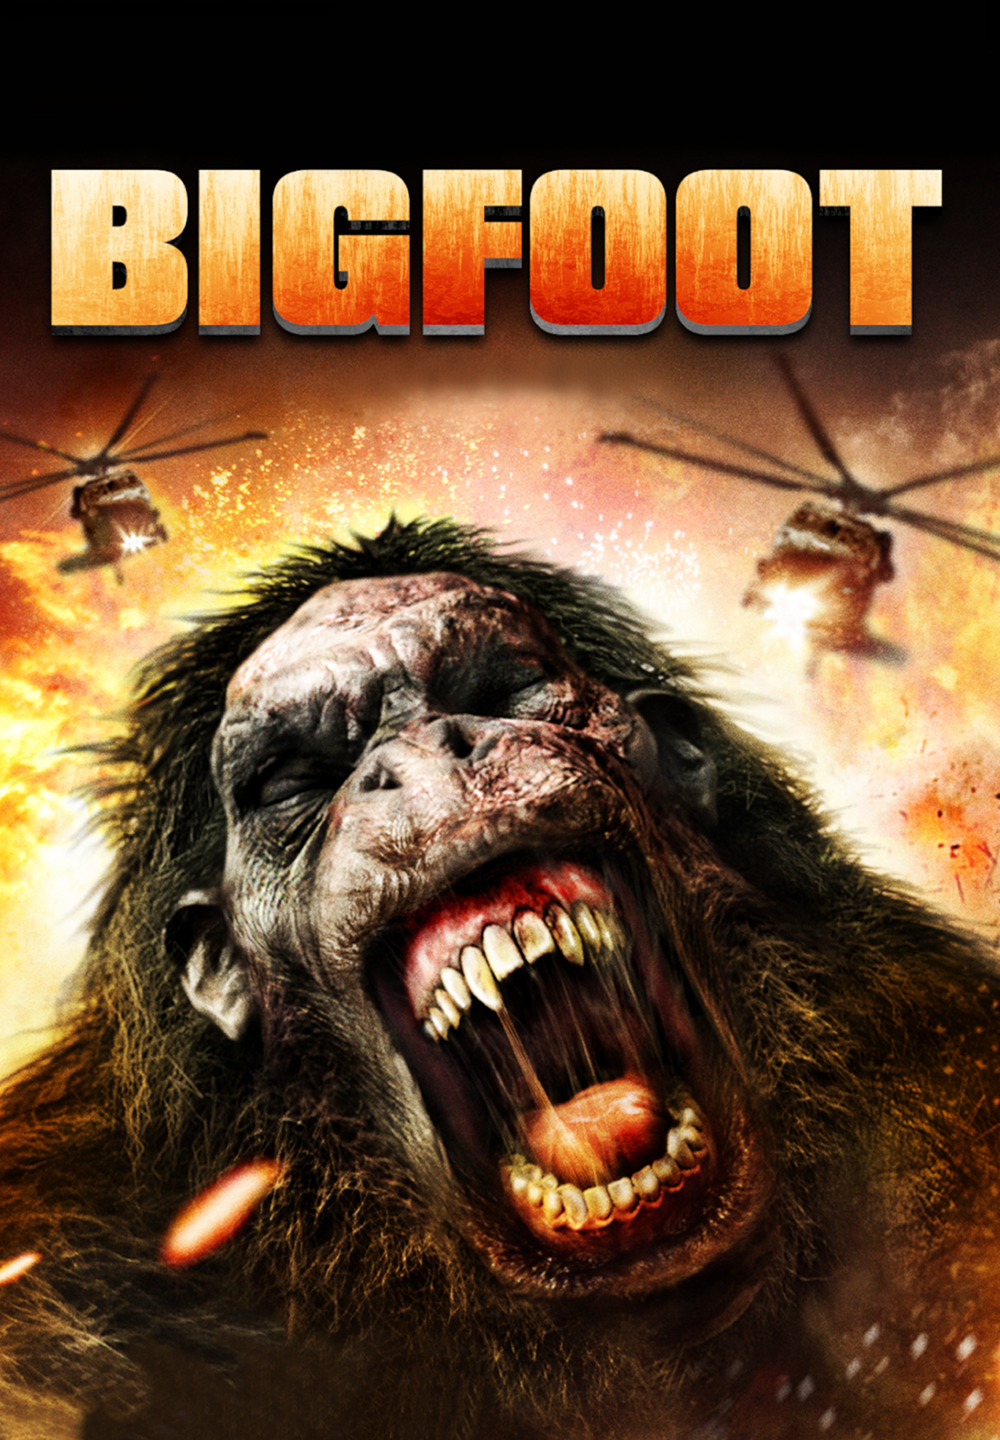 Bigfoot [HD] (2012)